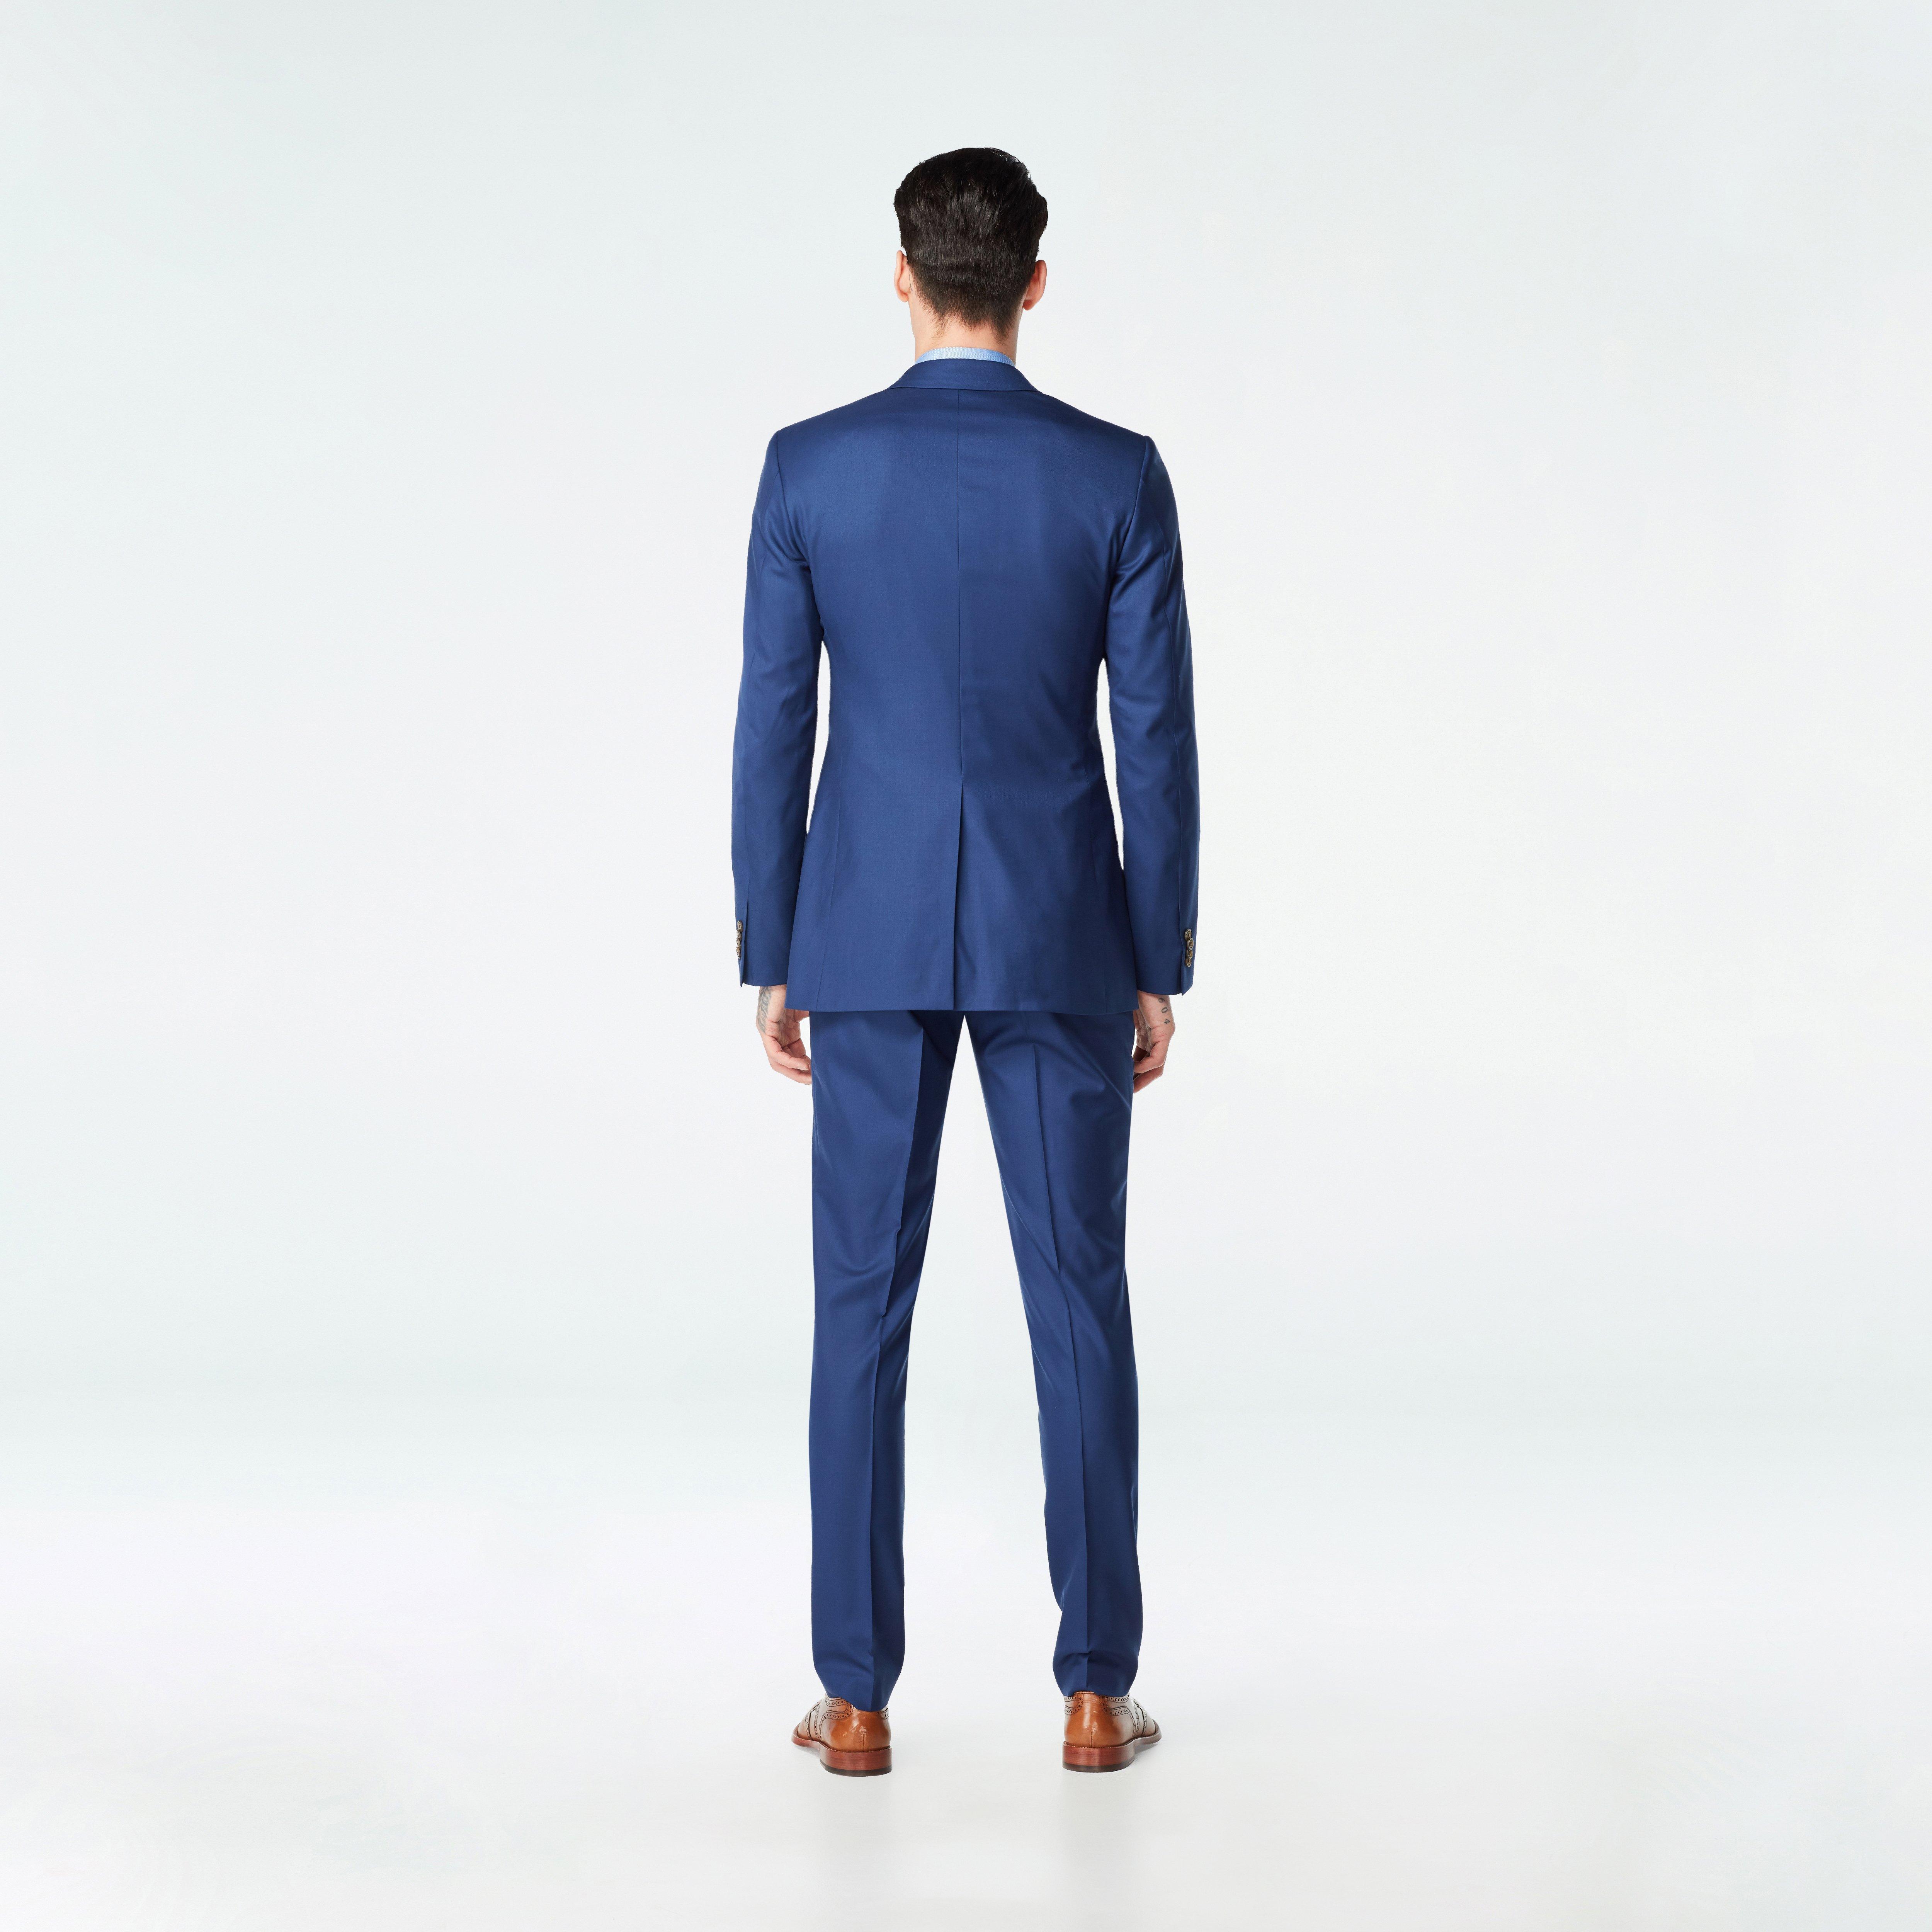 Highbridge Blue Suit